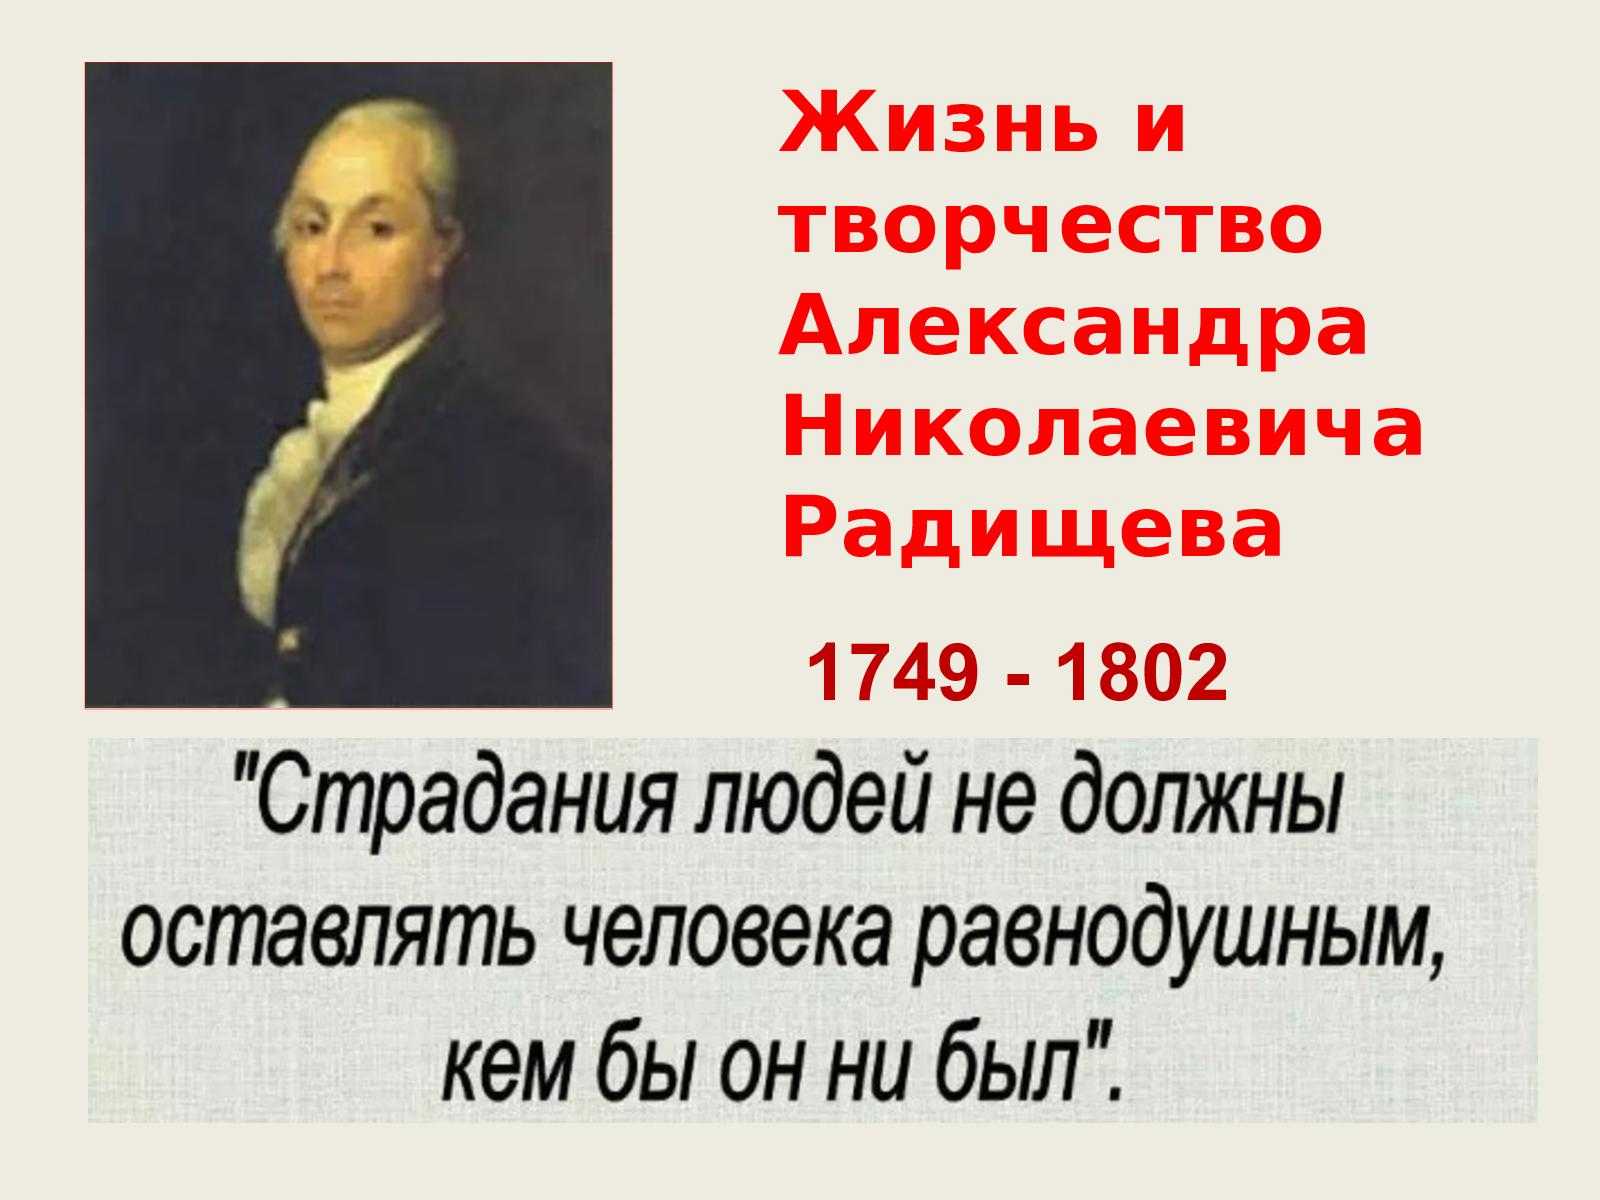 Б а н радищев. А.Н. Радищева (1749-1802). А.Н. Радищев (1749-1802). Философия а.н. Радищева (1749-1802)..